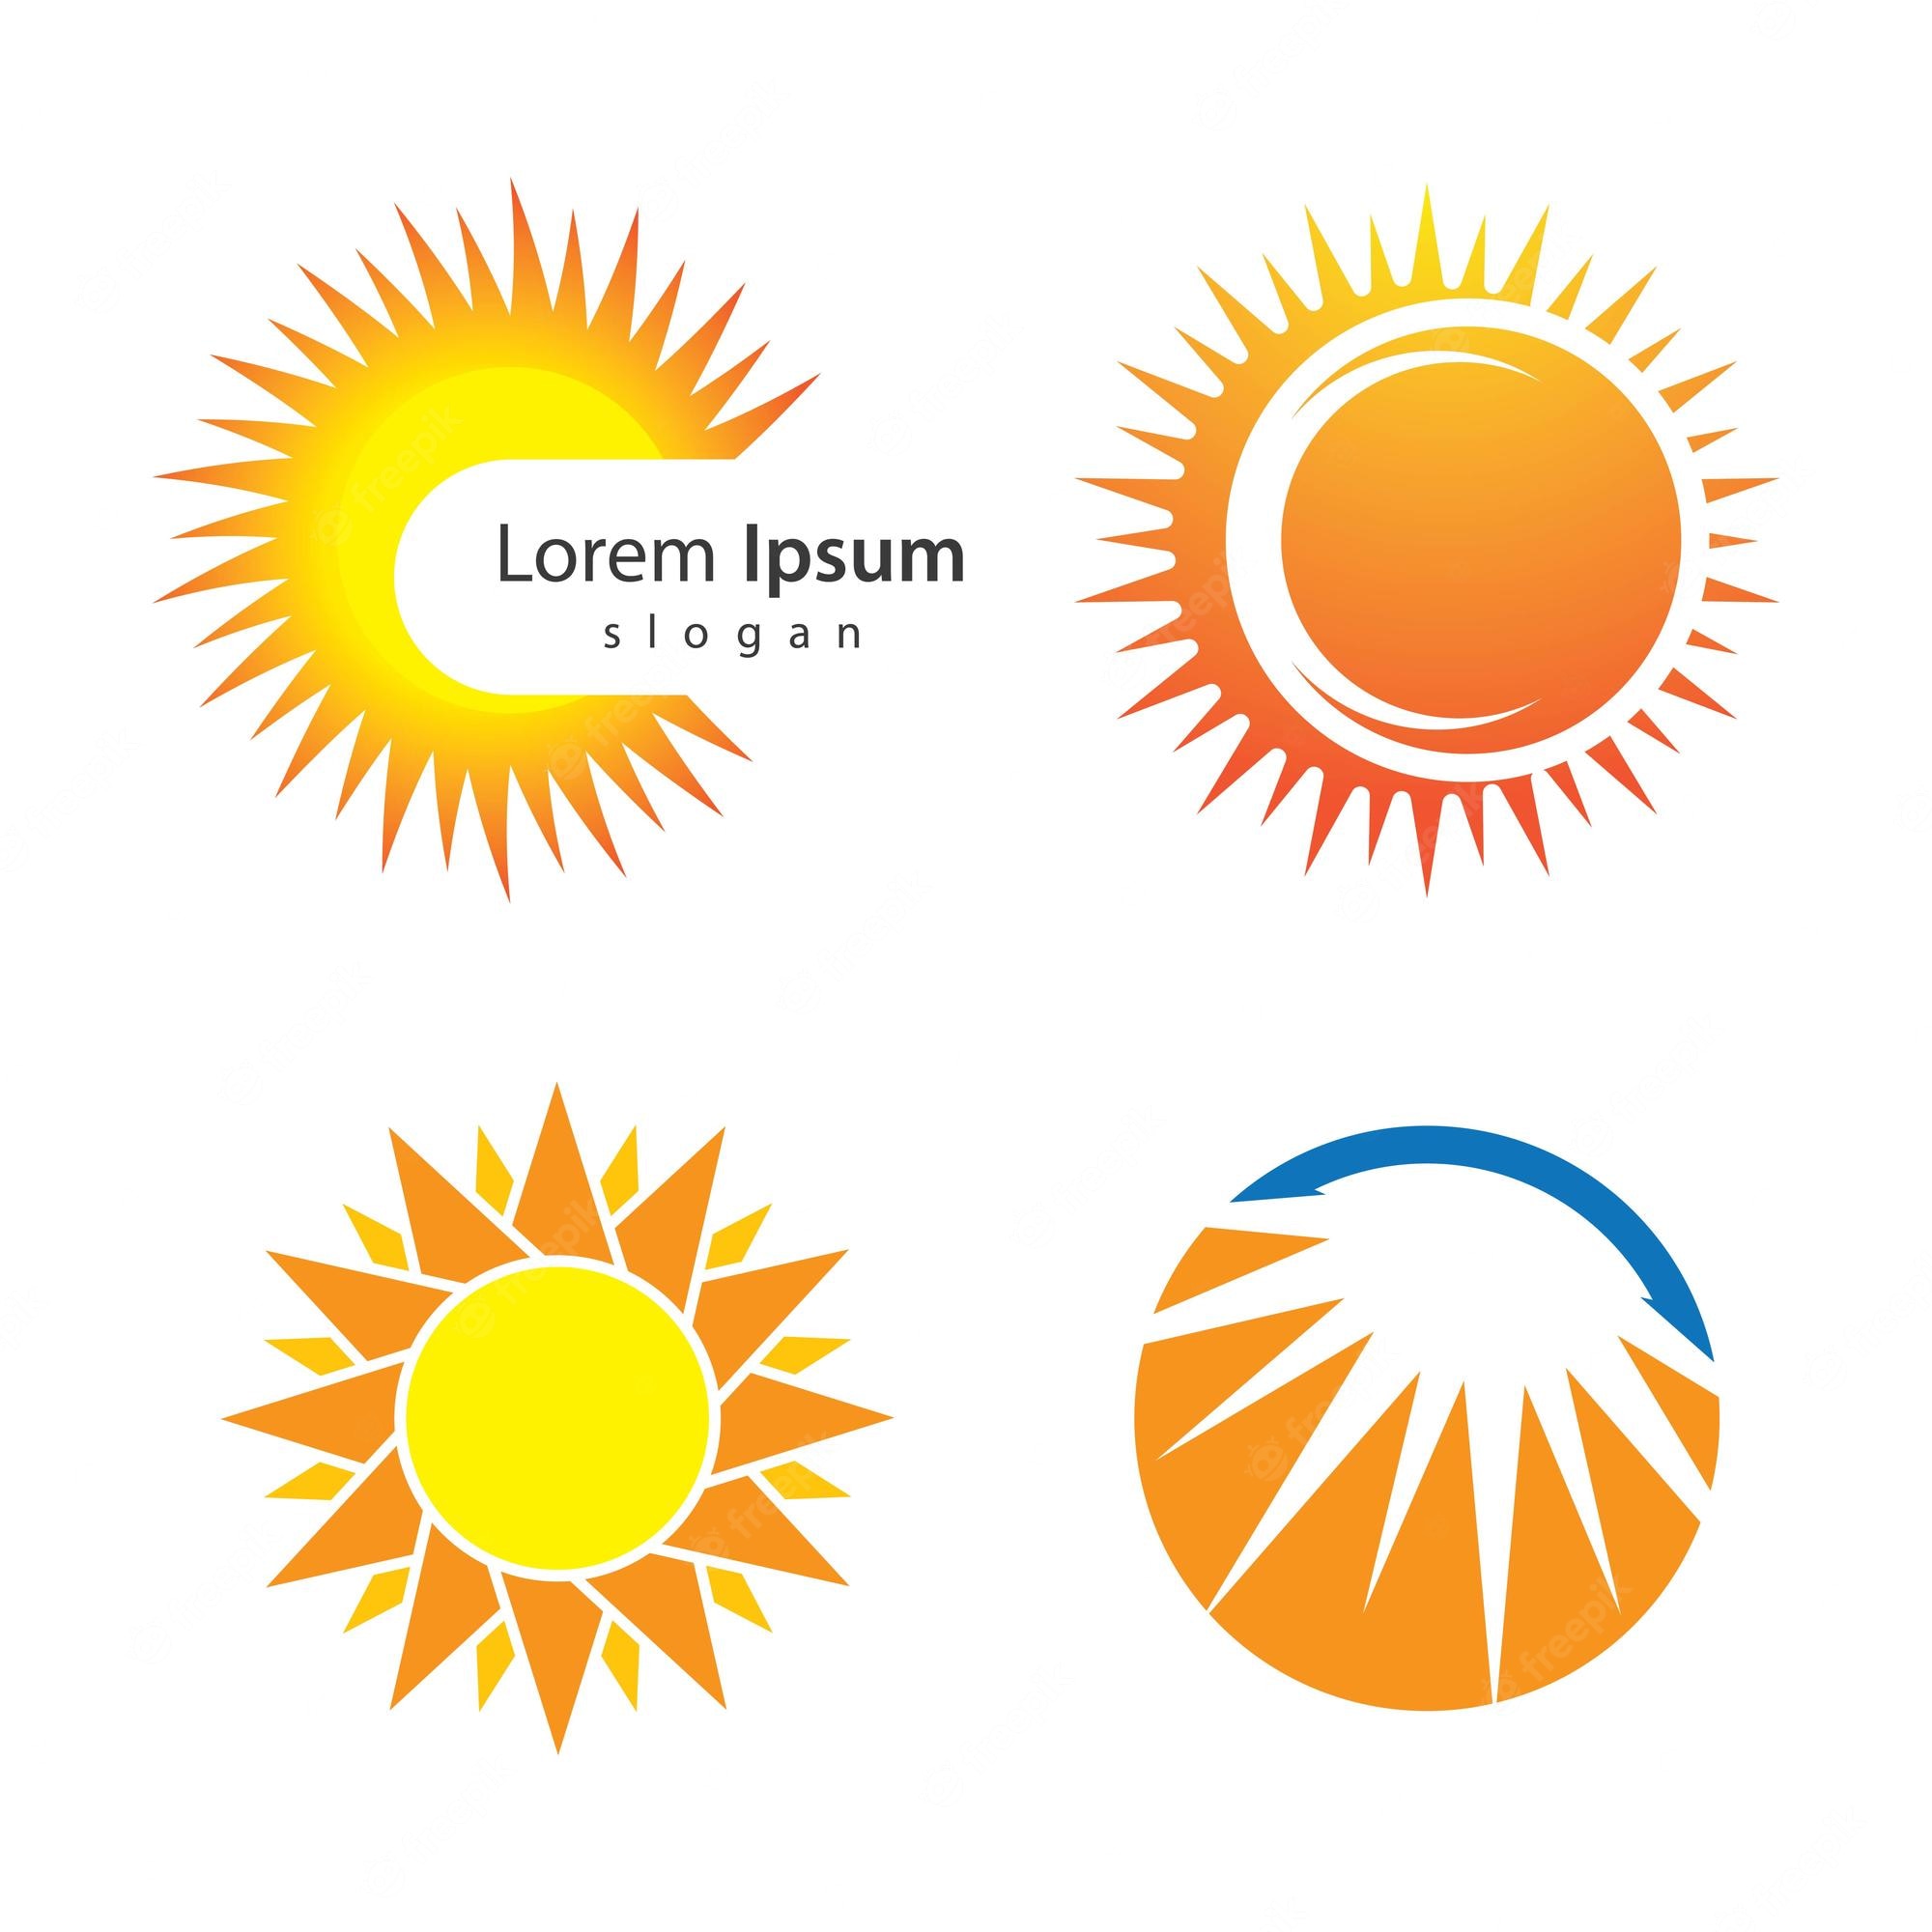 Premium Vector. Sun logo image illustration